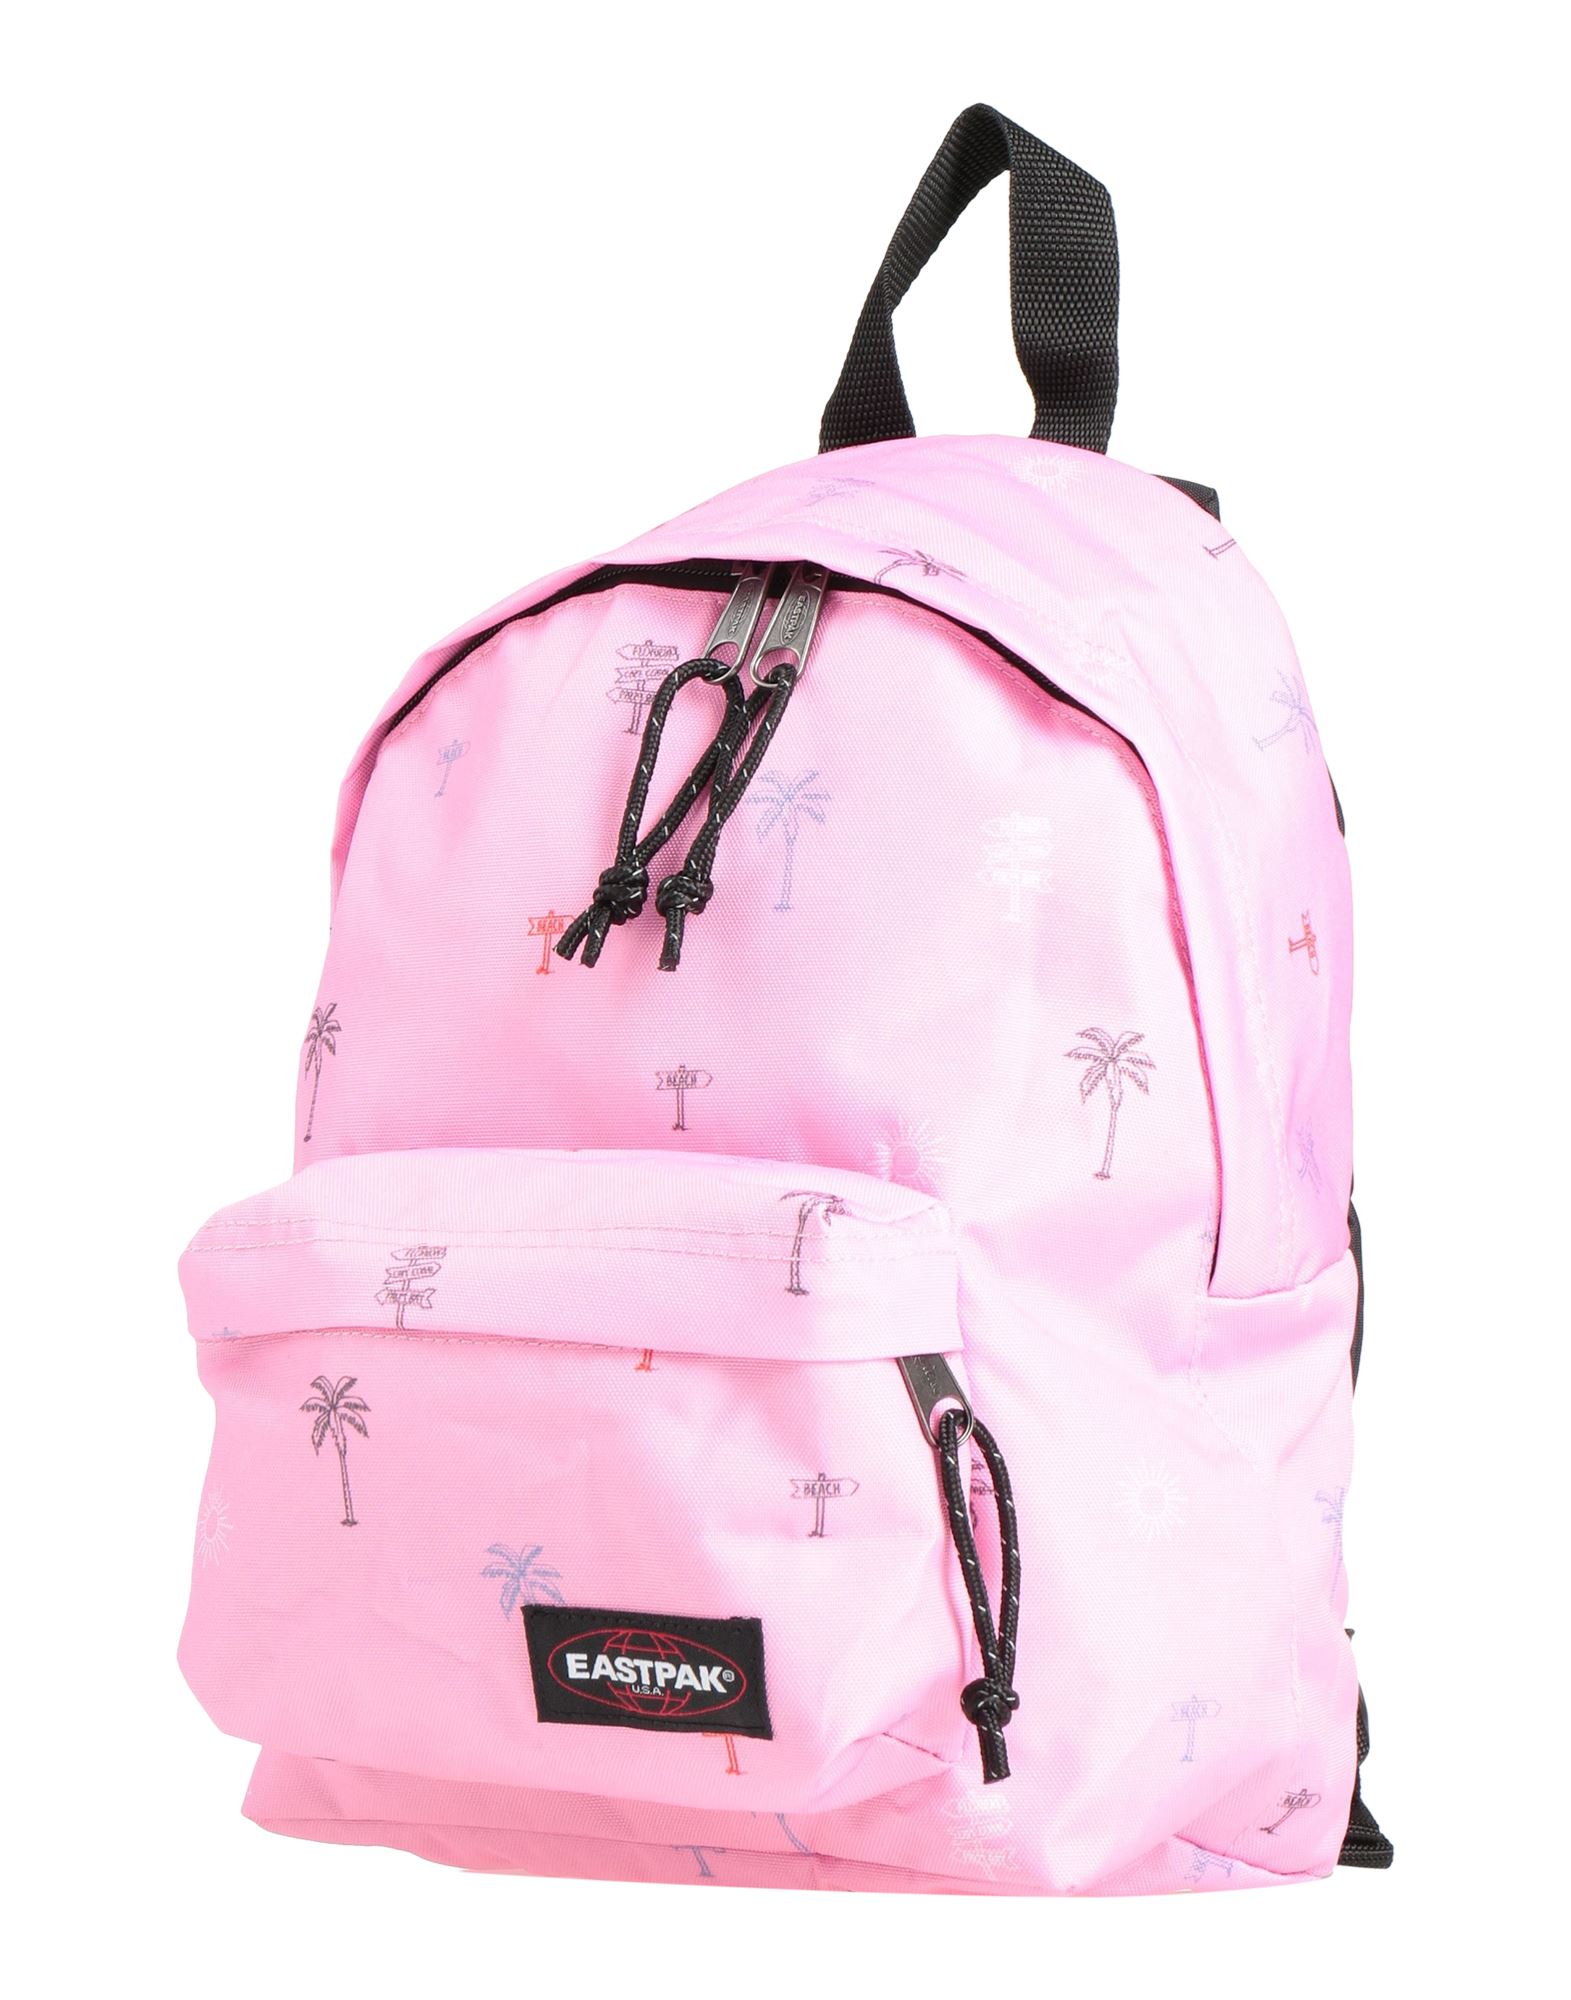 Ga naar beneden dinsdag Misleidend Eastpak Backpacks In Light Pink | ModeSens